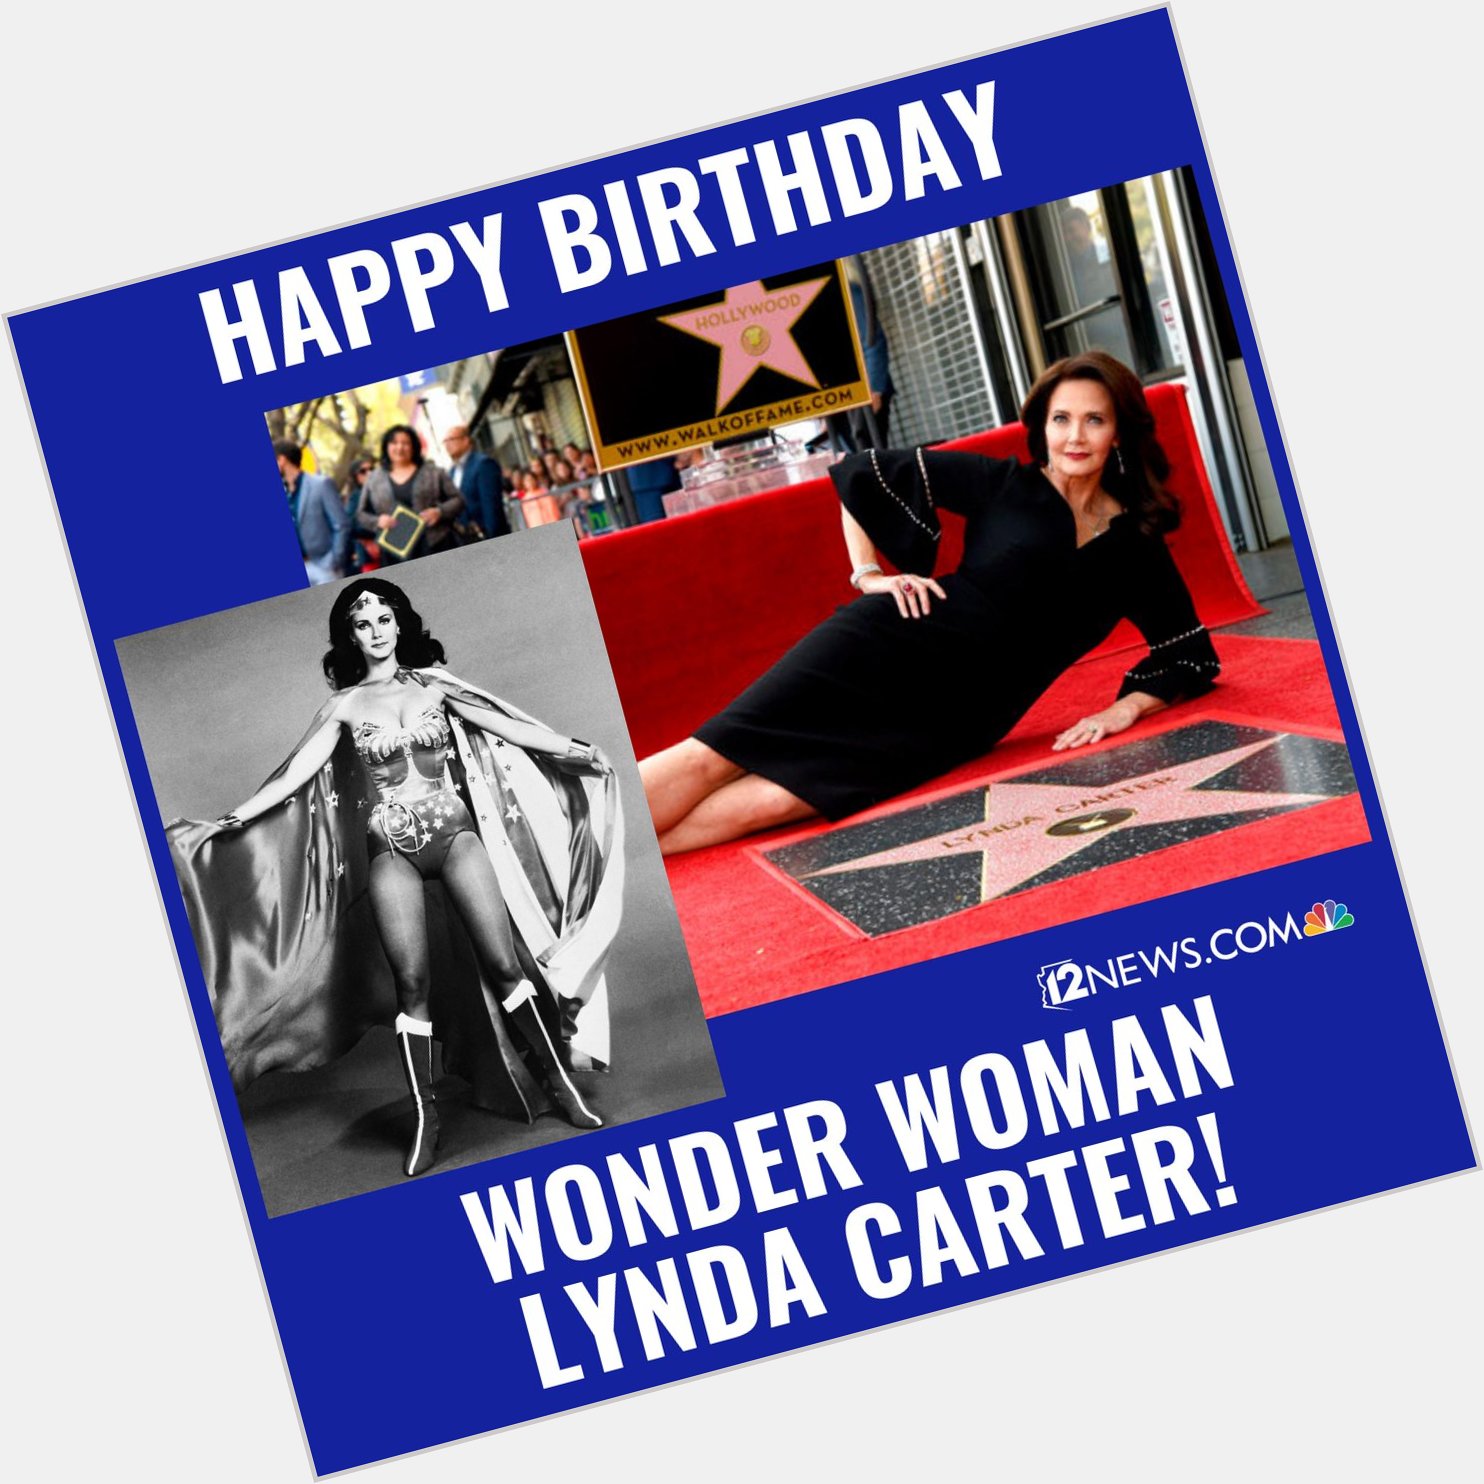 Happy birthday to Lynda Carter! She was born in Phoenix 